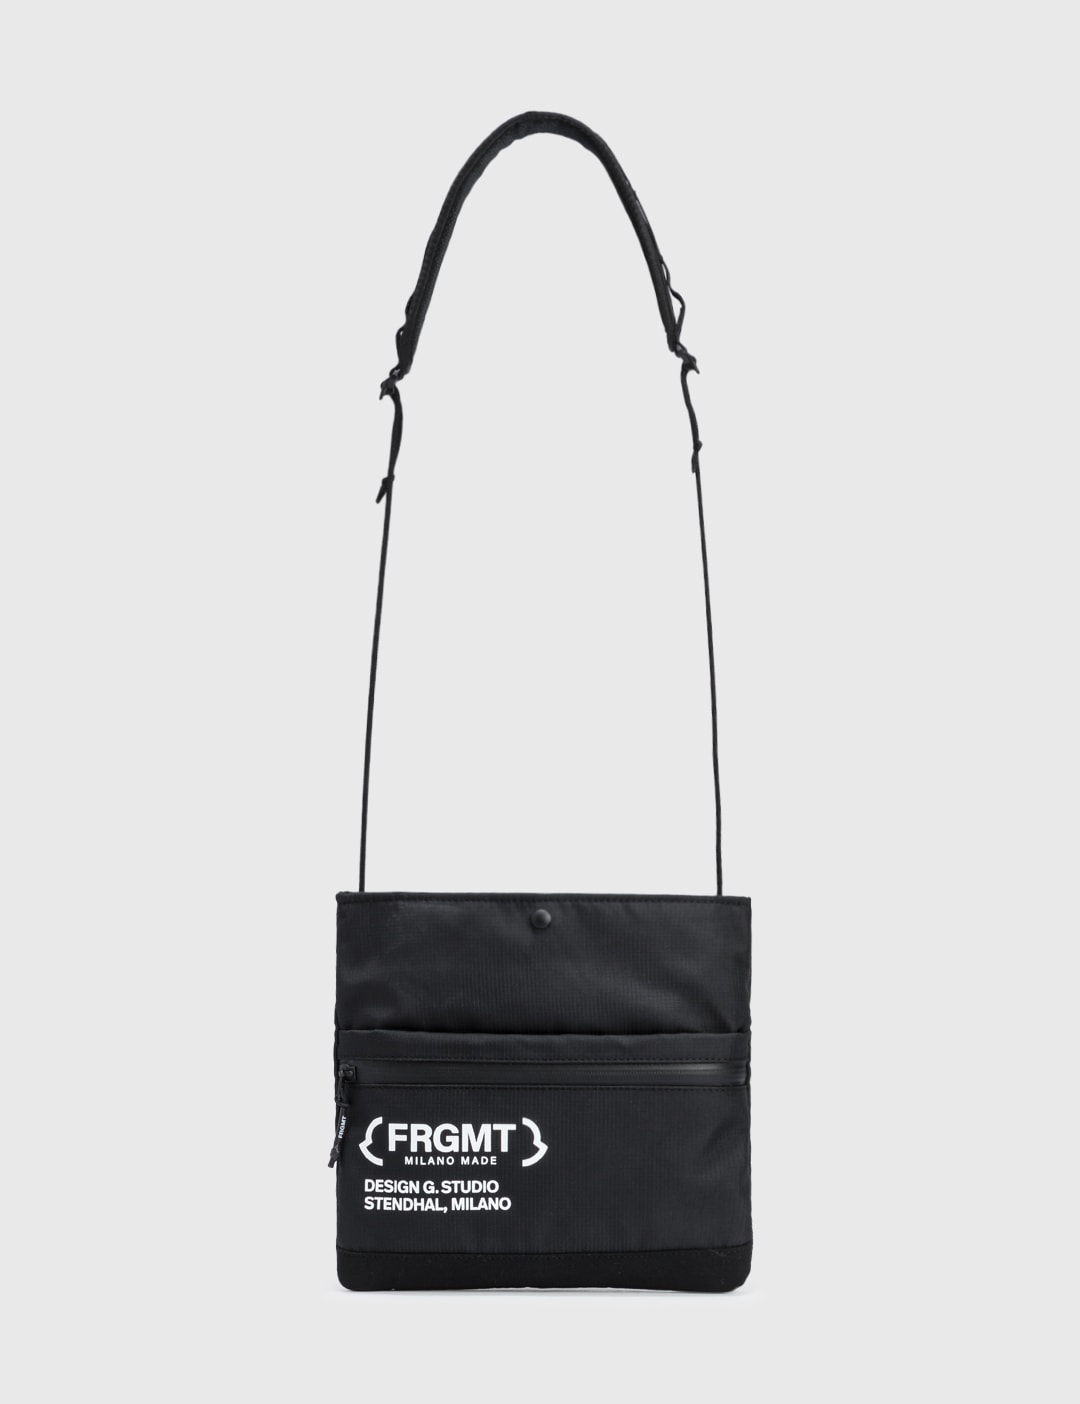 7 Moncler FRGMT Hiroshi Fujiwara Sacoche Crossbody Bag Placeholder Image